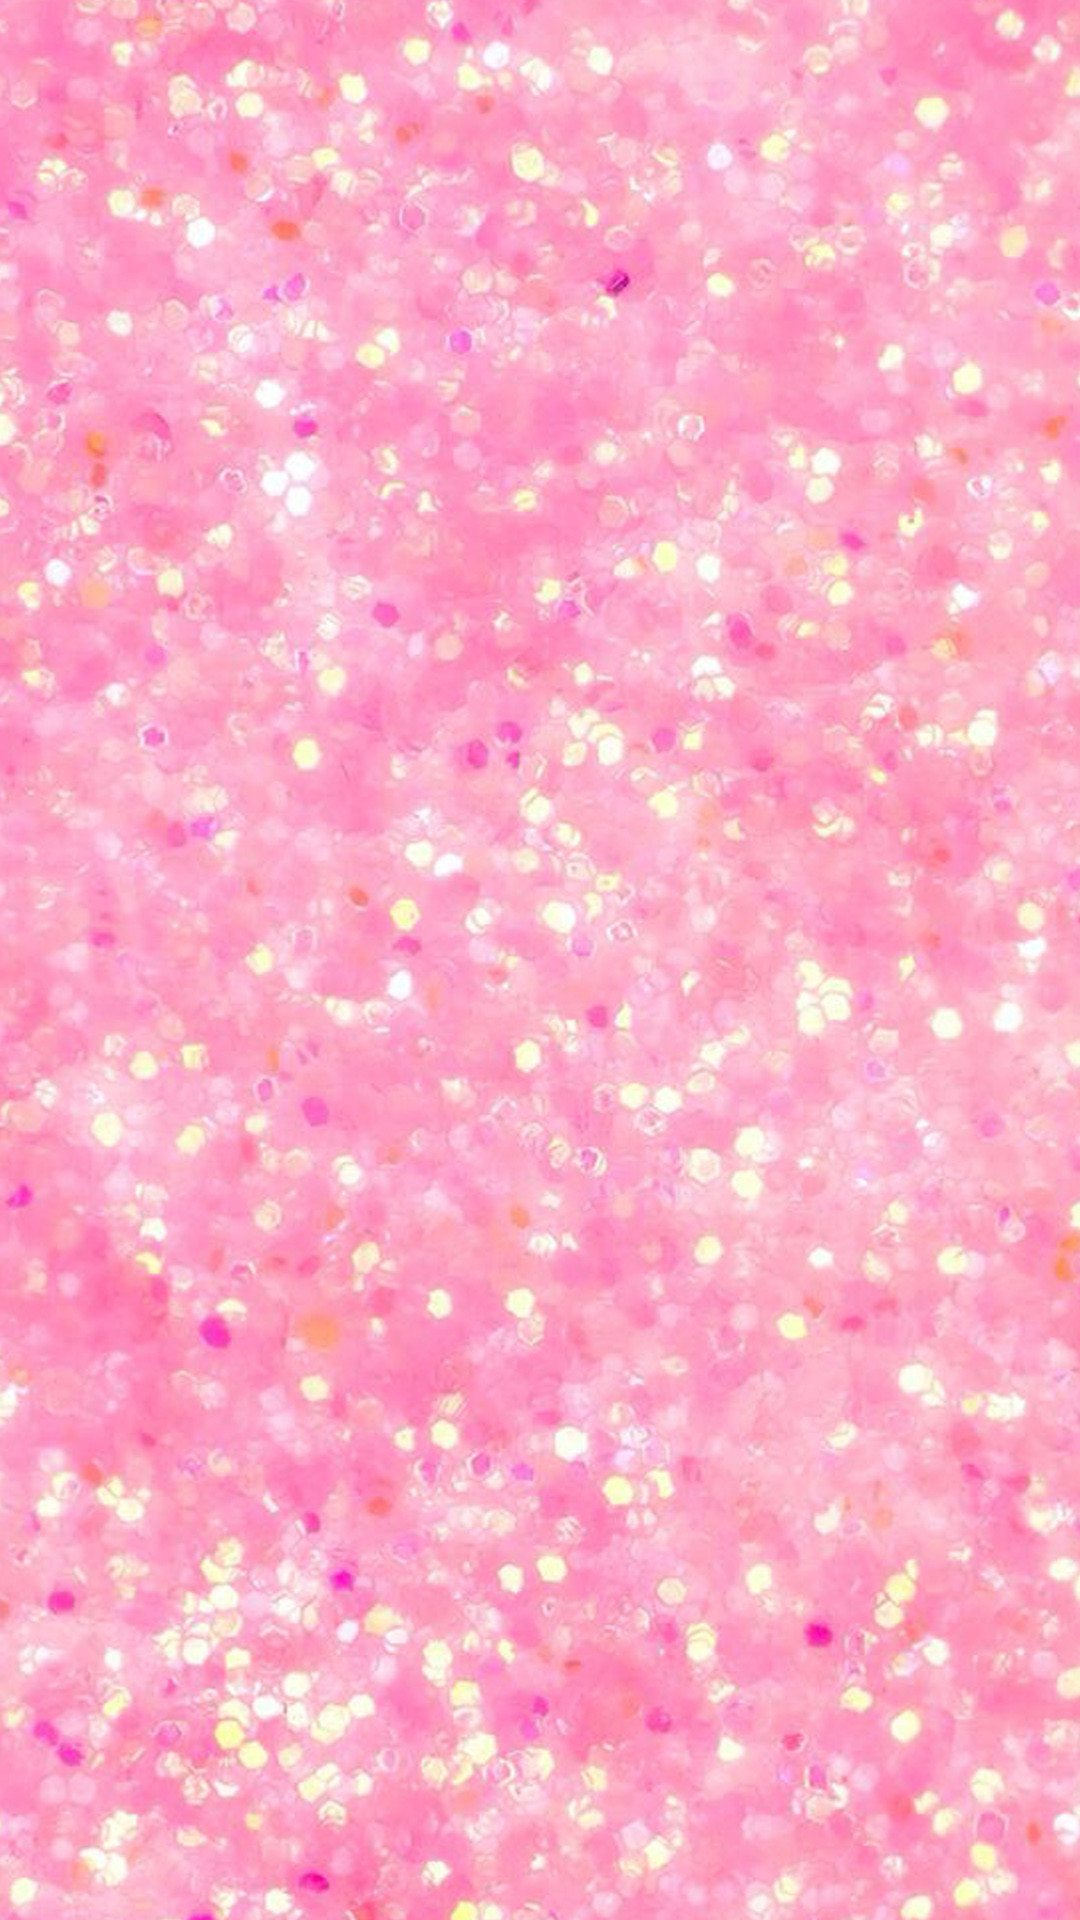 1080x1920 Pink glitter girly wallpaper